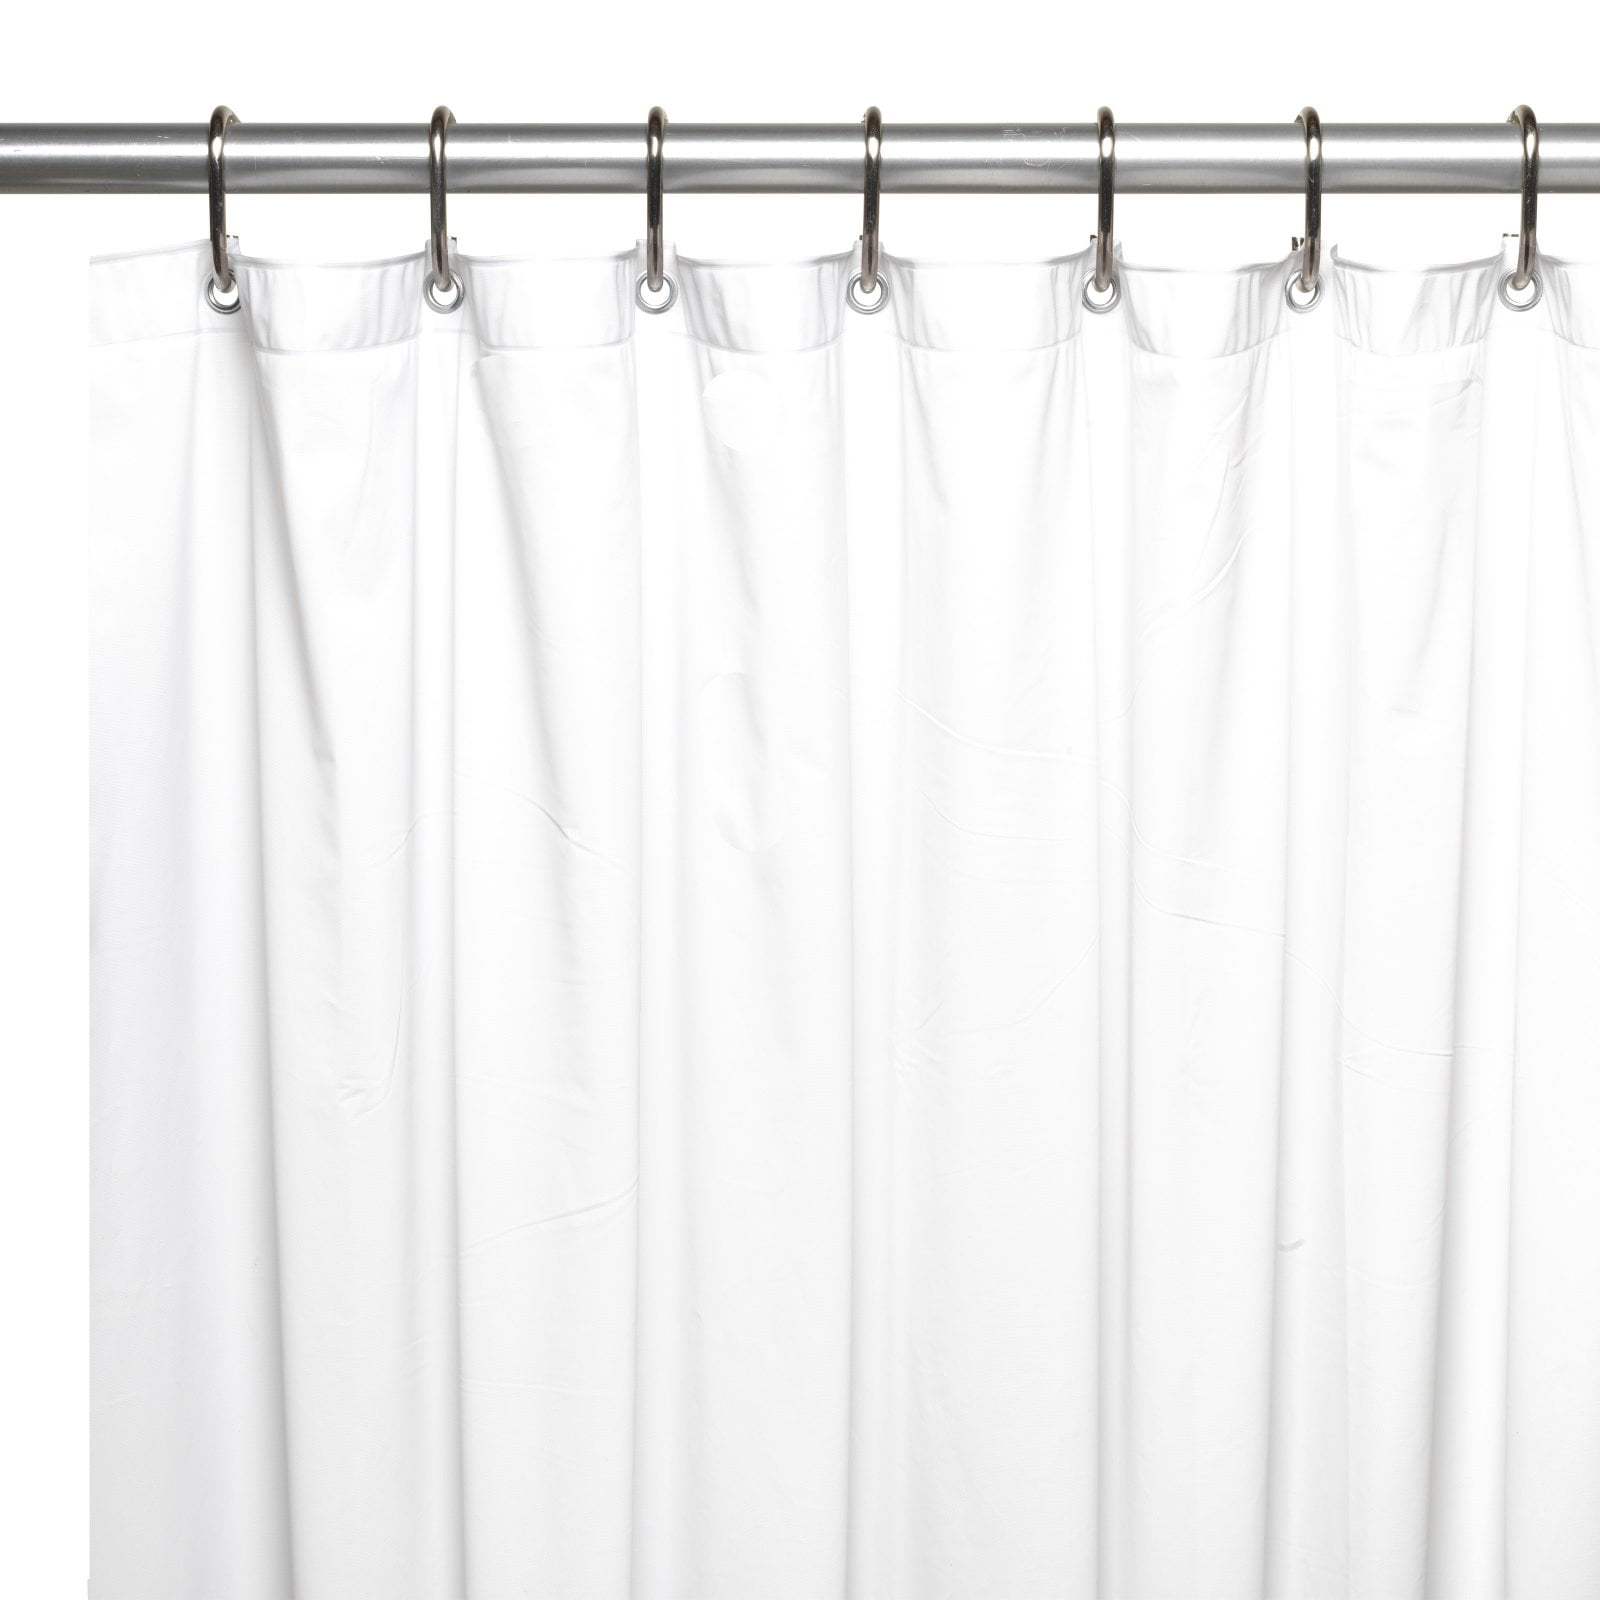 Maytex Hotel Style 8 Gauge Vinyl Shower Curtain Stall Liner in White 54" x 78" 